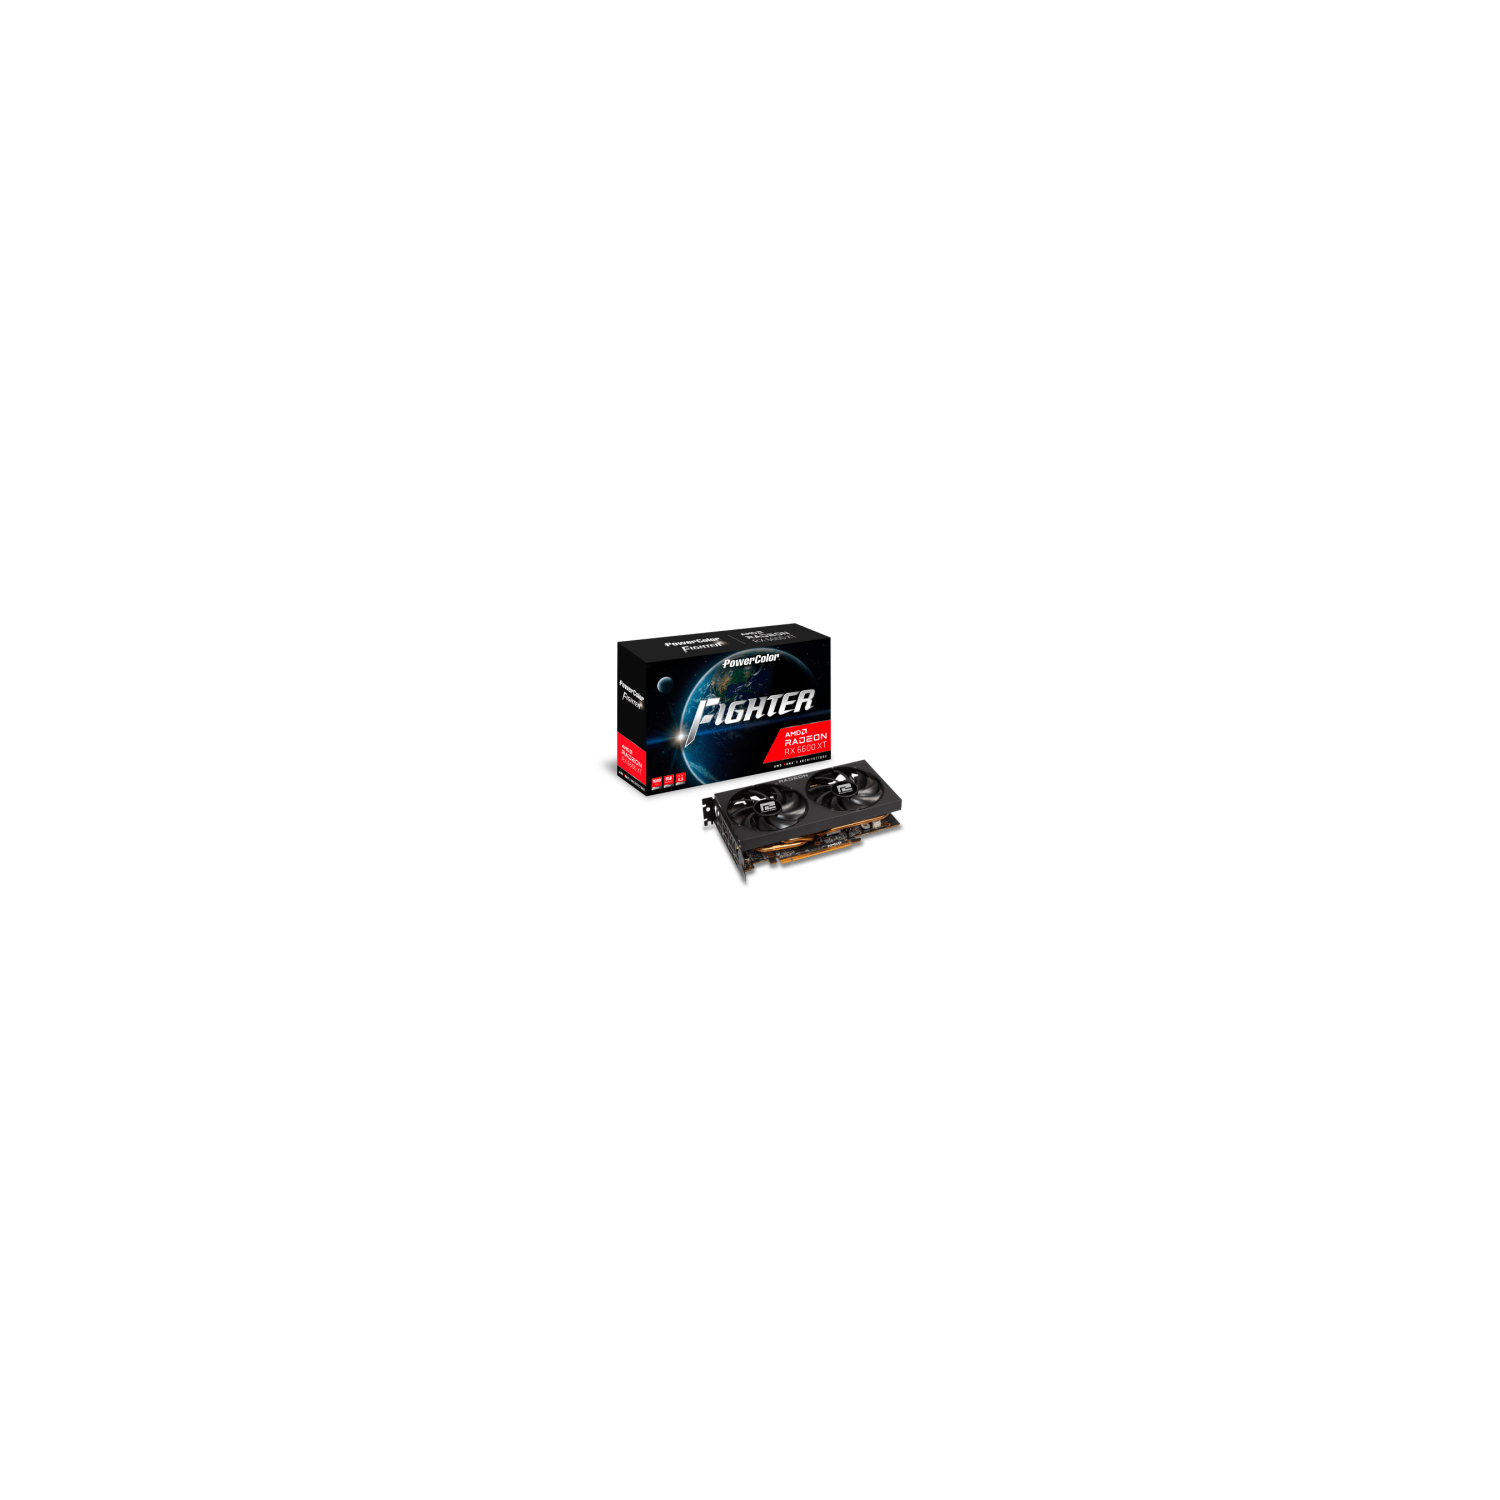 PowerColor Fighter AMD Radeon RX 6600 8GB GDDR6 2044Mhz Black Graphics Card (AXRX 6600 8GBD6-3DH)